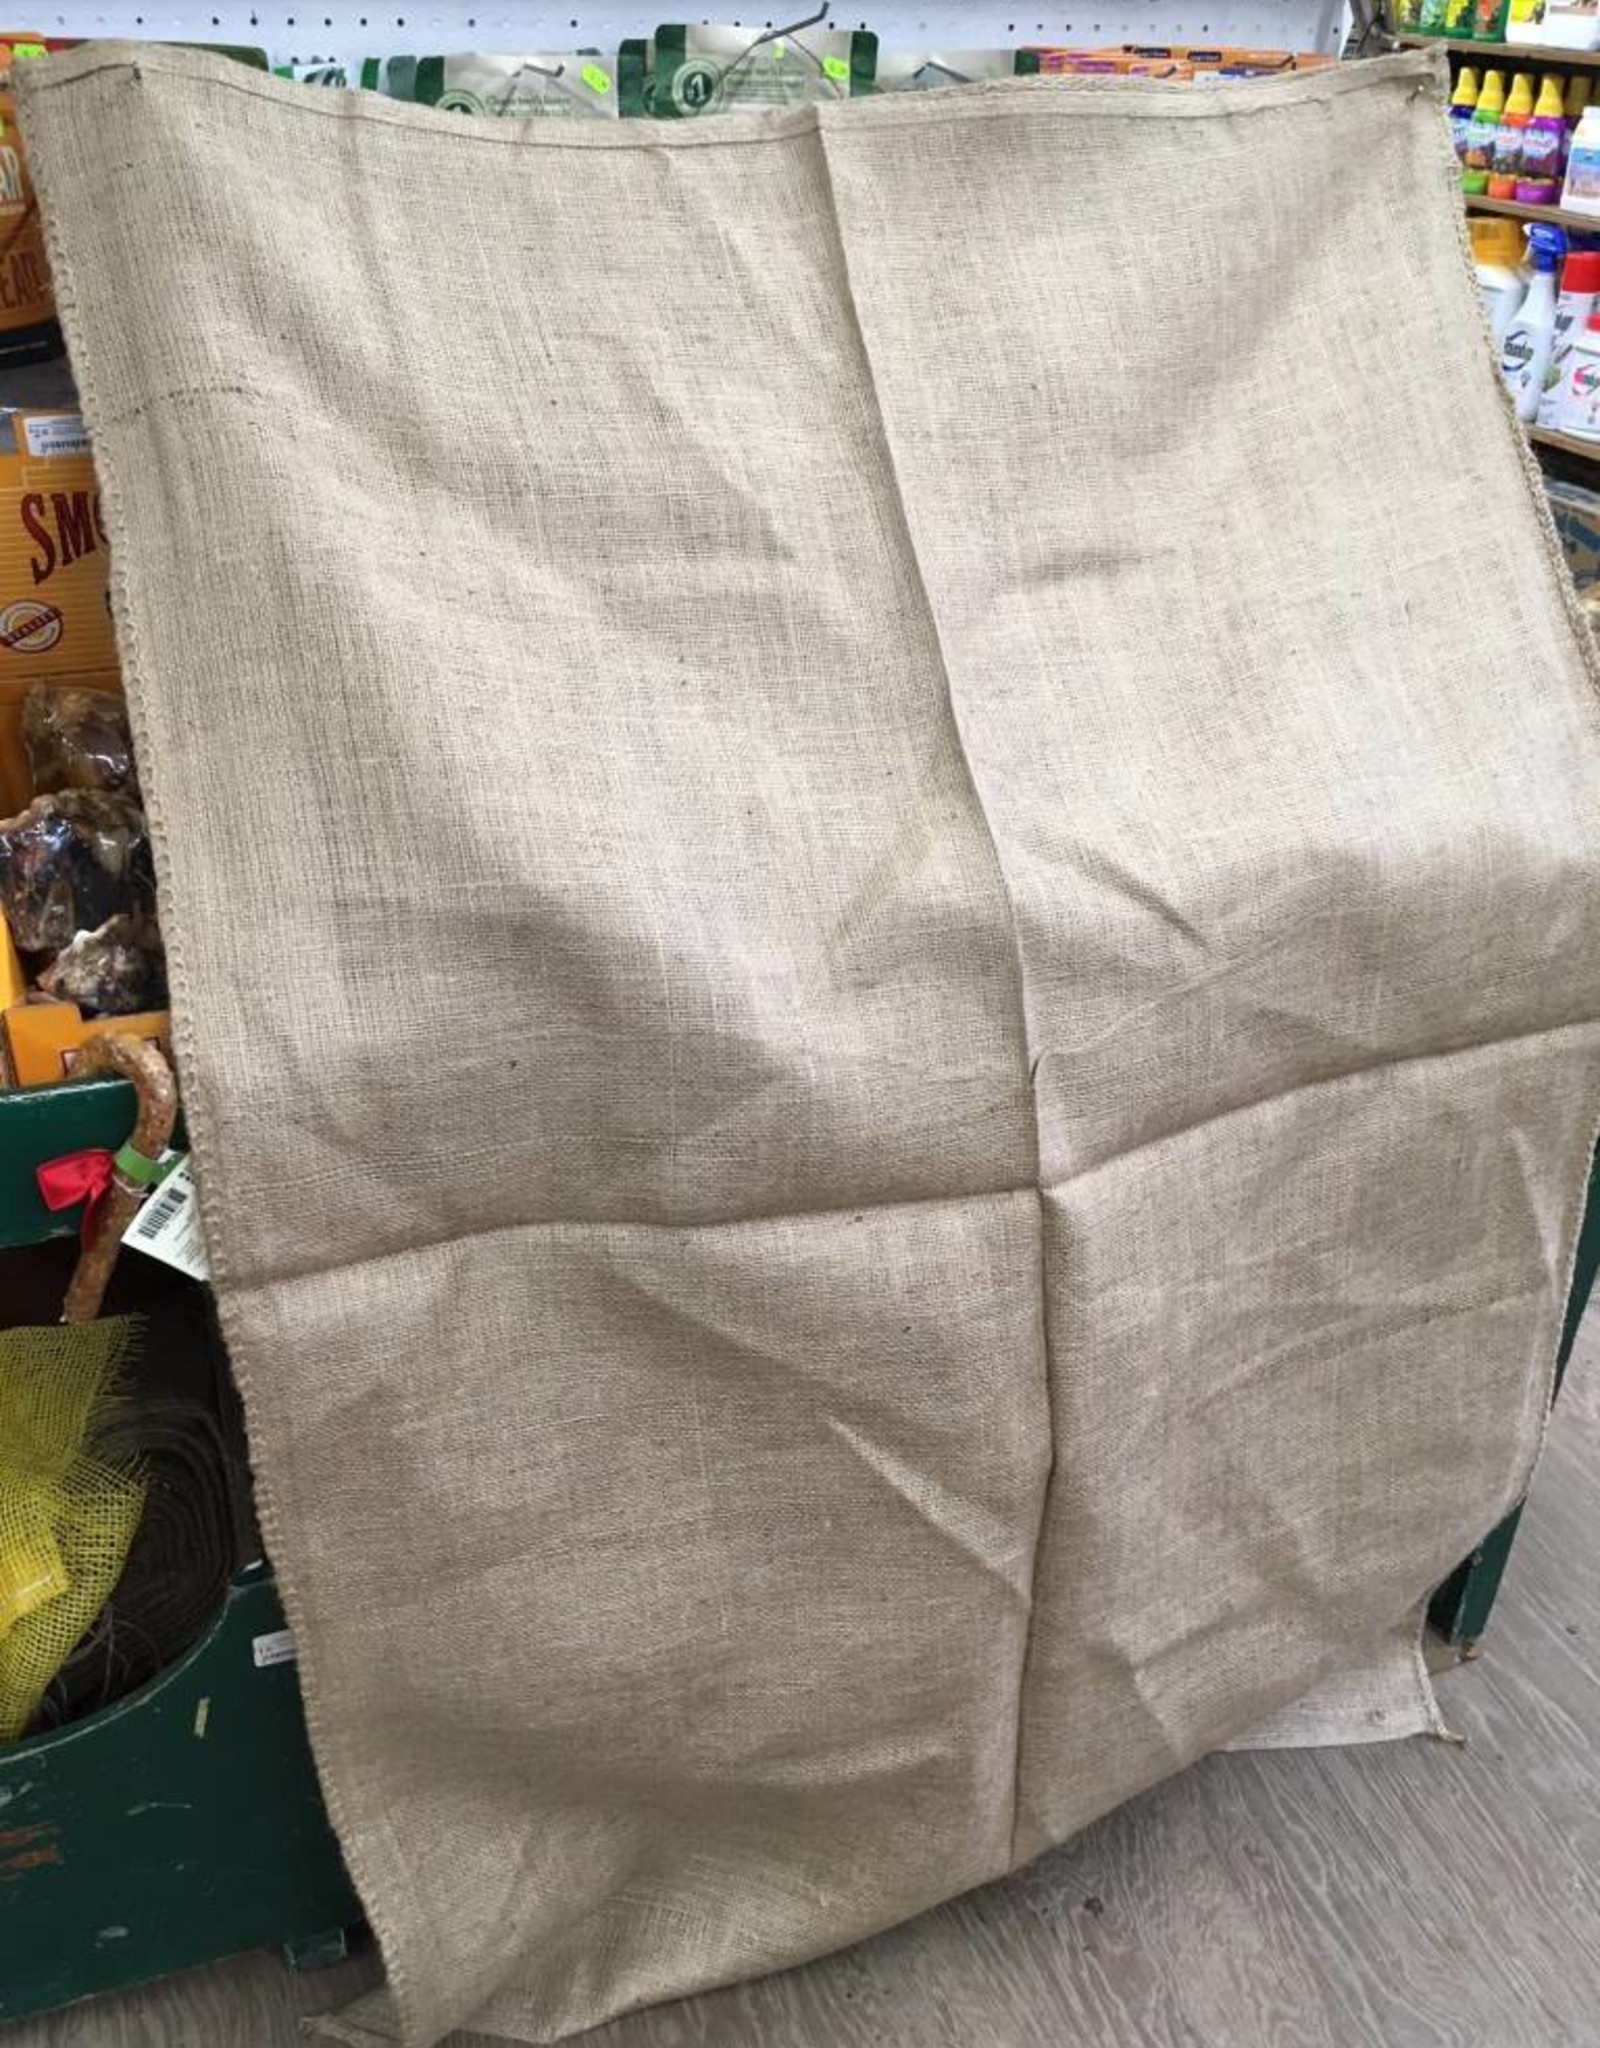 Burlap sack (bag) Jumbo 40x60 inches